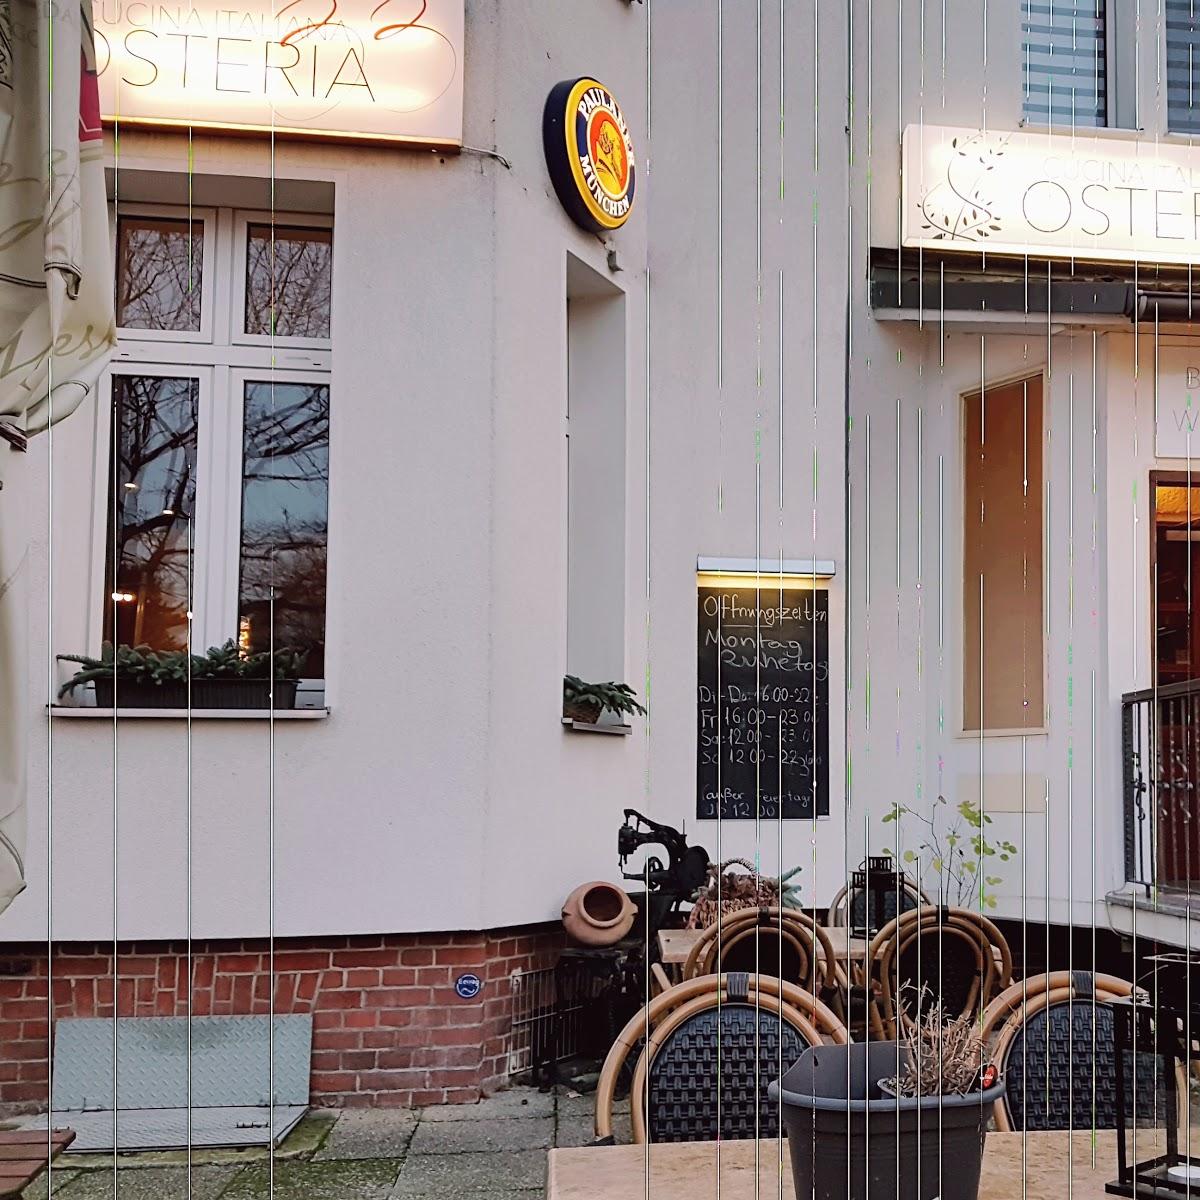 Restaurant "Osteria 33" in Berlin